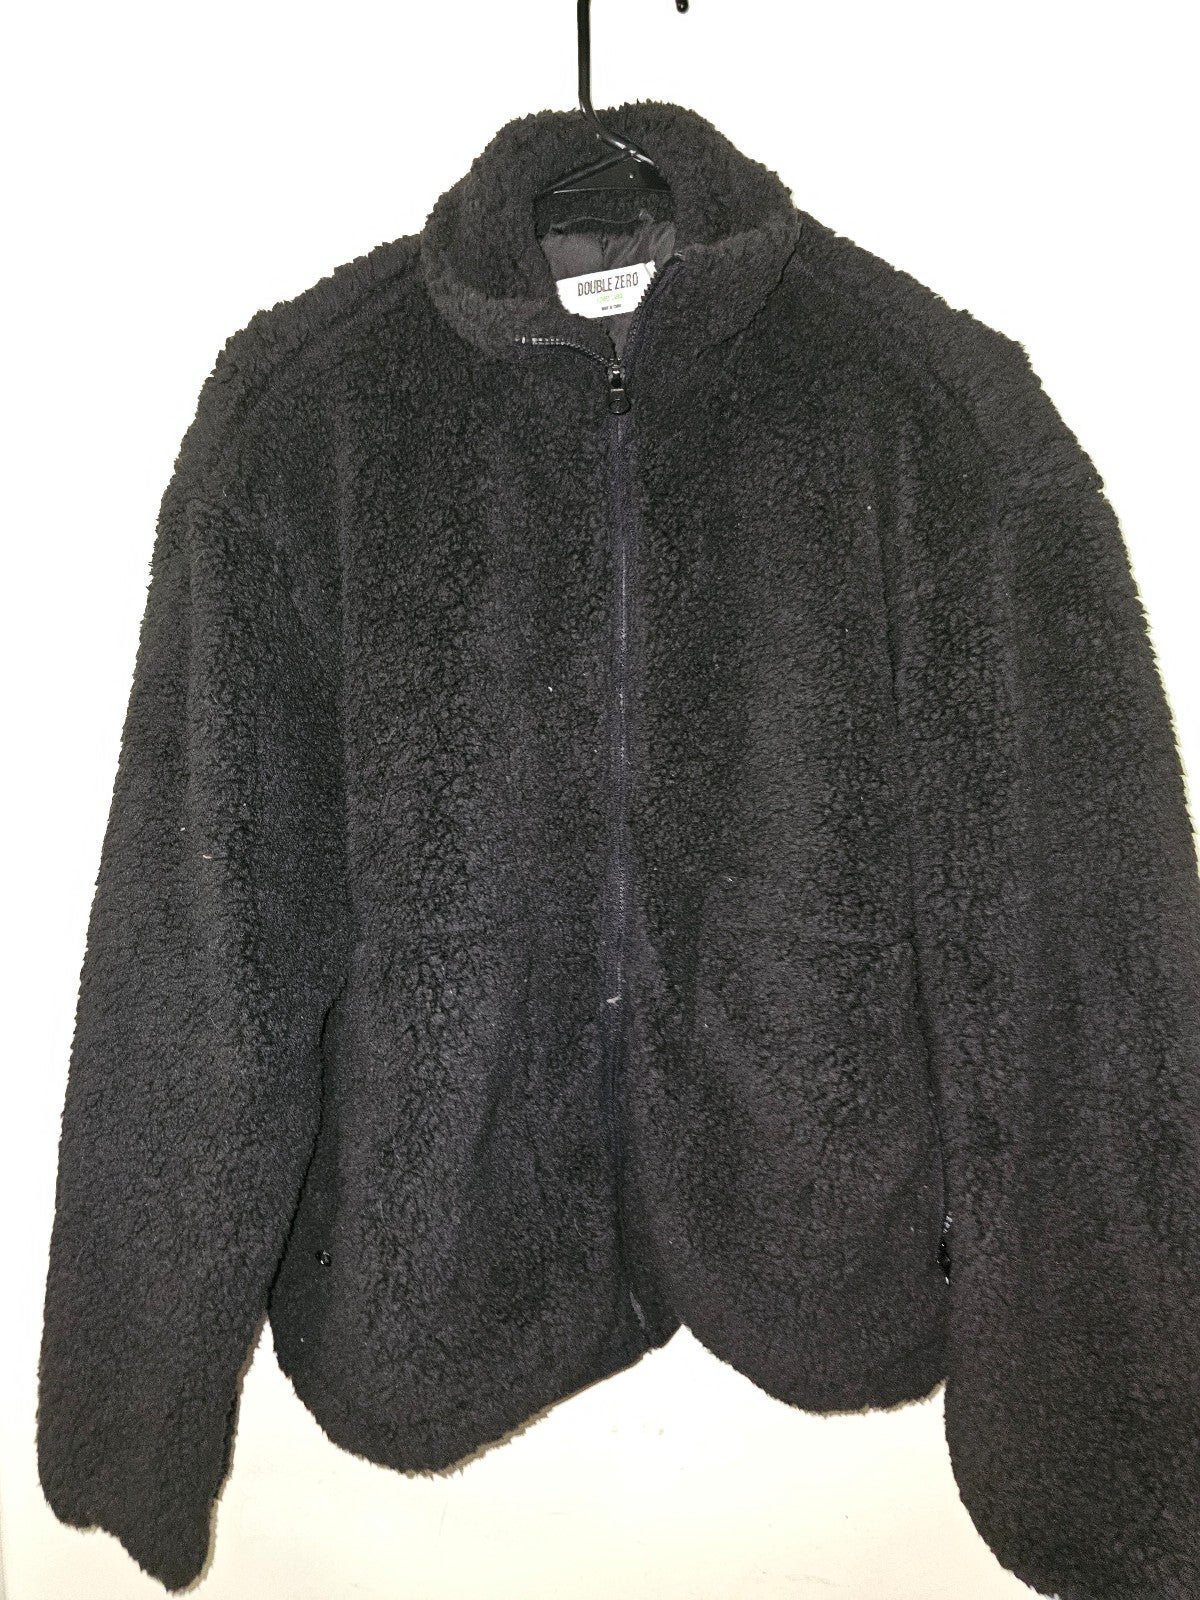 Bomber fleece jacket size large EEvNvzju7